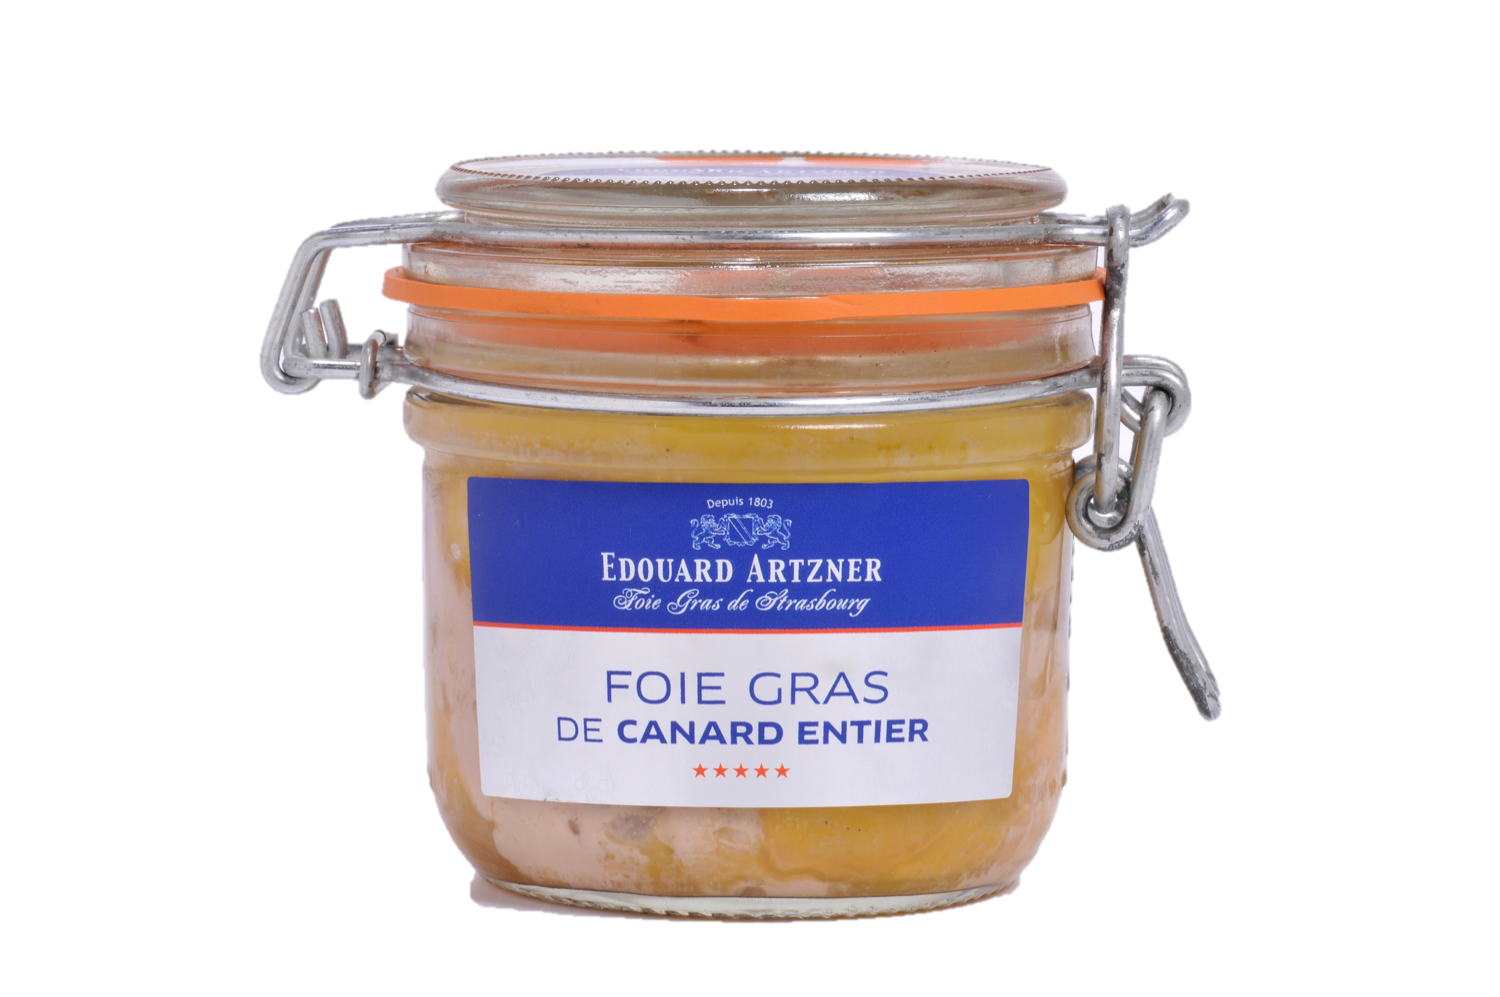 Foie gras de canard entier